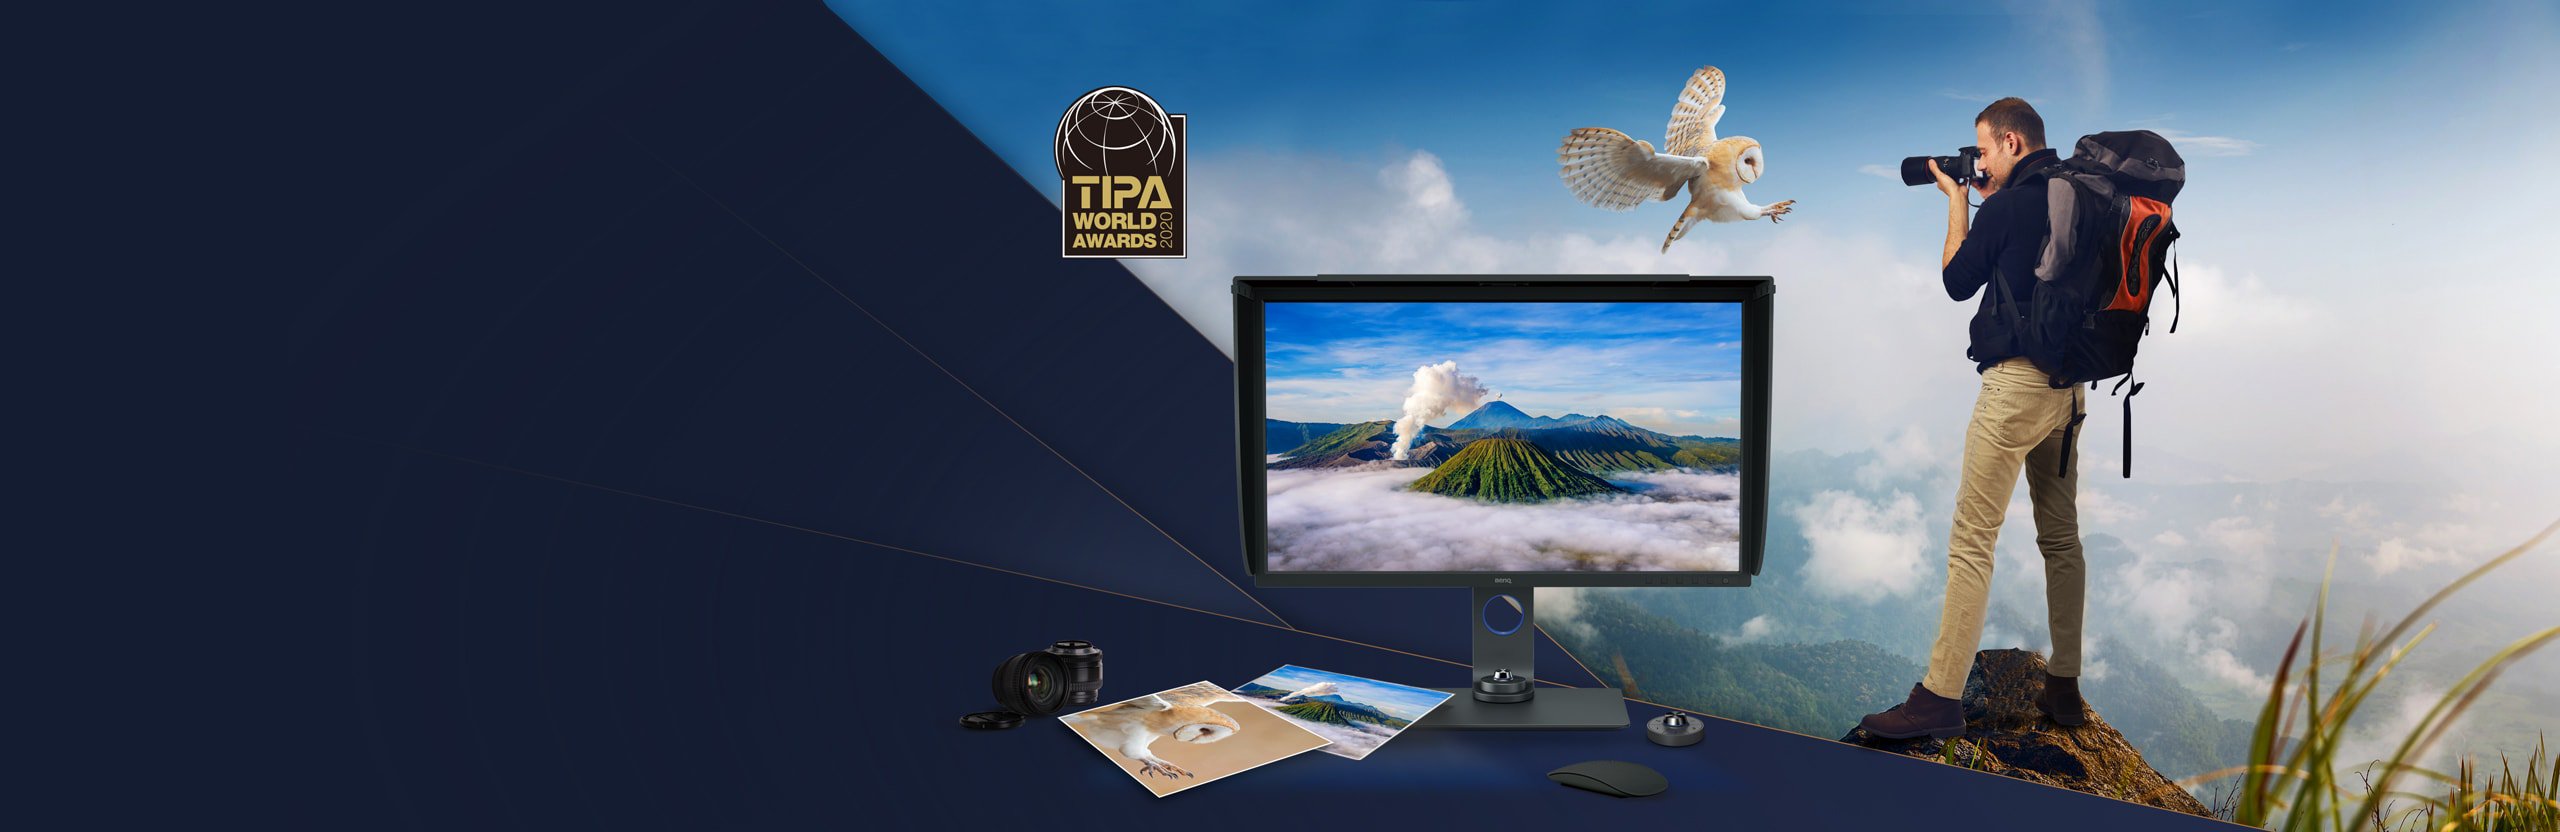 SW321C 榮獲 2020 TIPA 最佳攝影修圖專業螢幕大賞